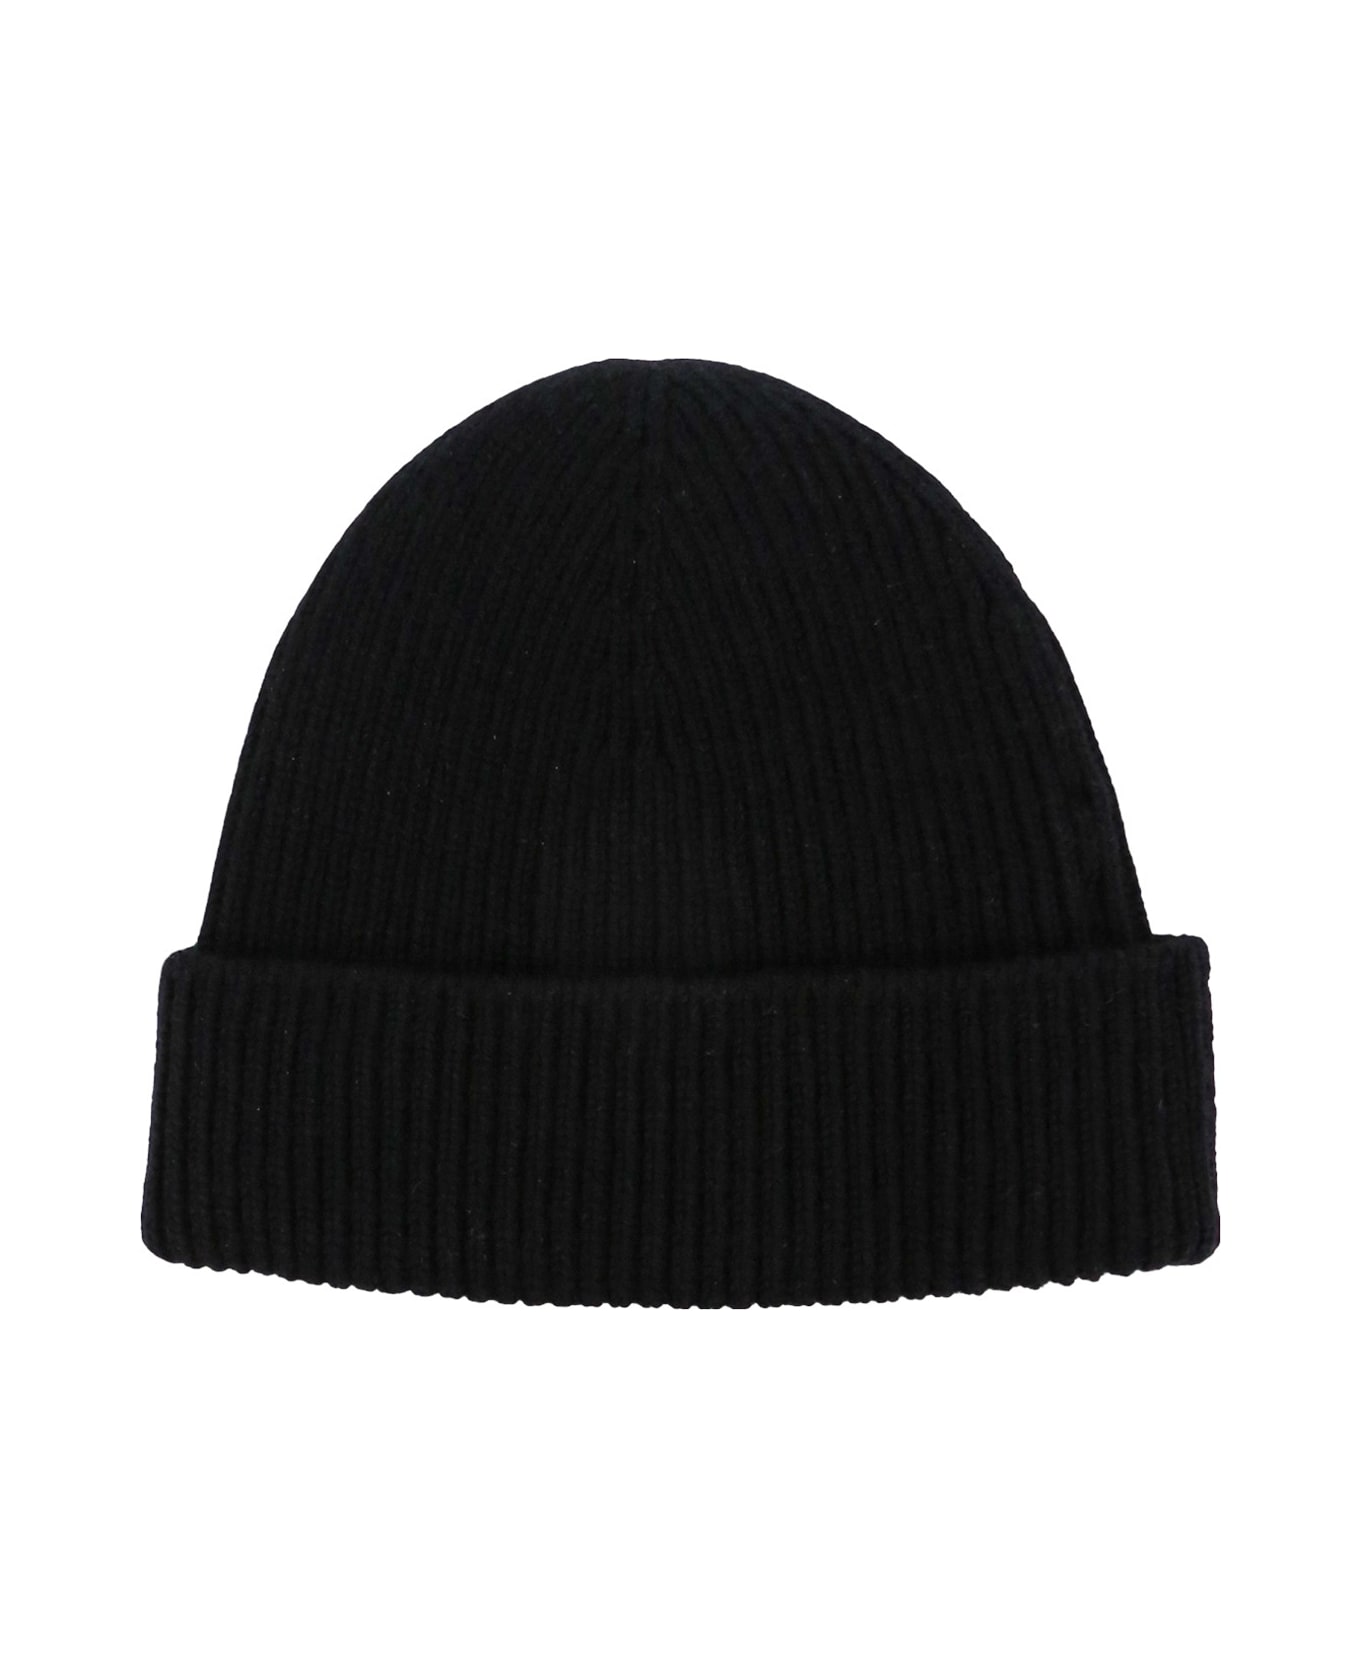 Burberry Ekd Beanie Hat - Black